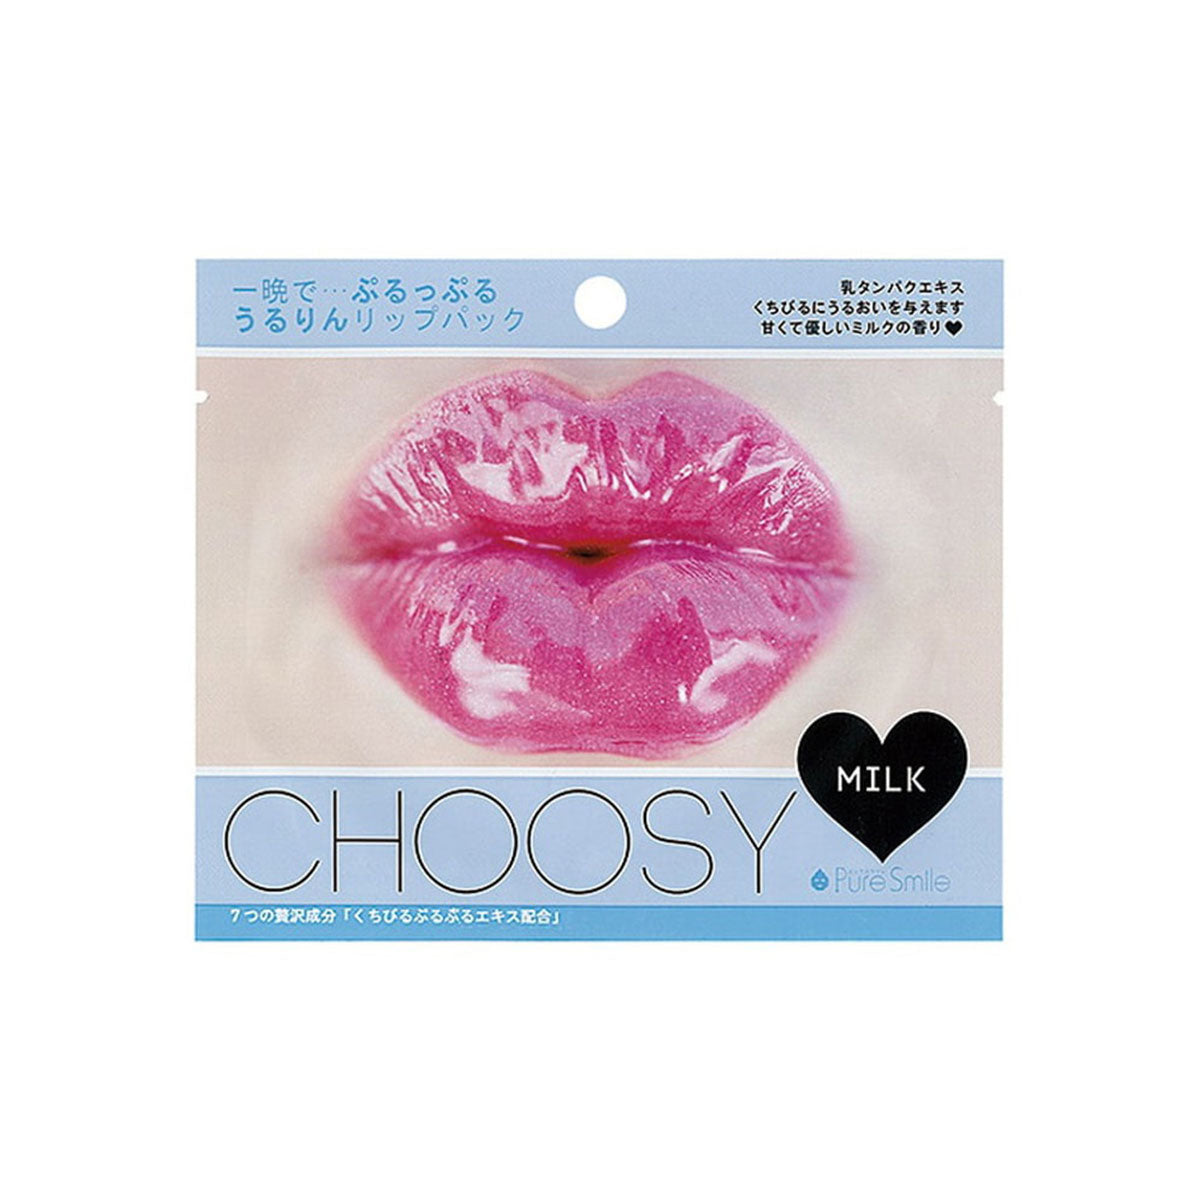 Pure Smile Choosy Lip Mask#Milk 1pcs